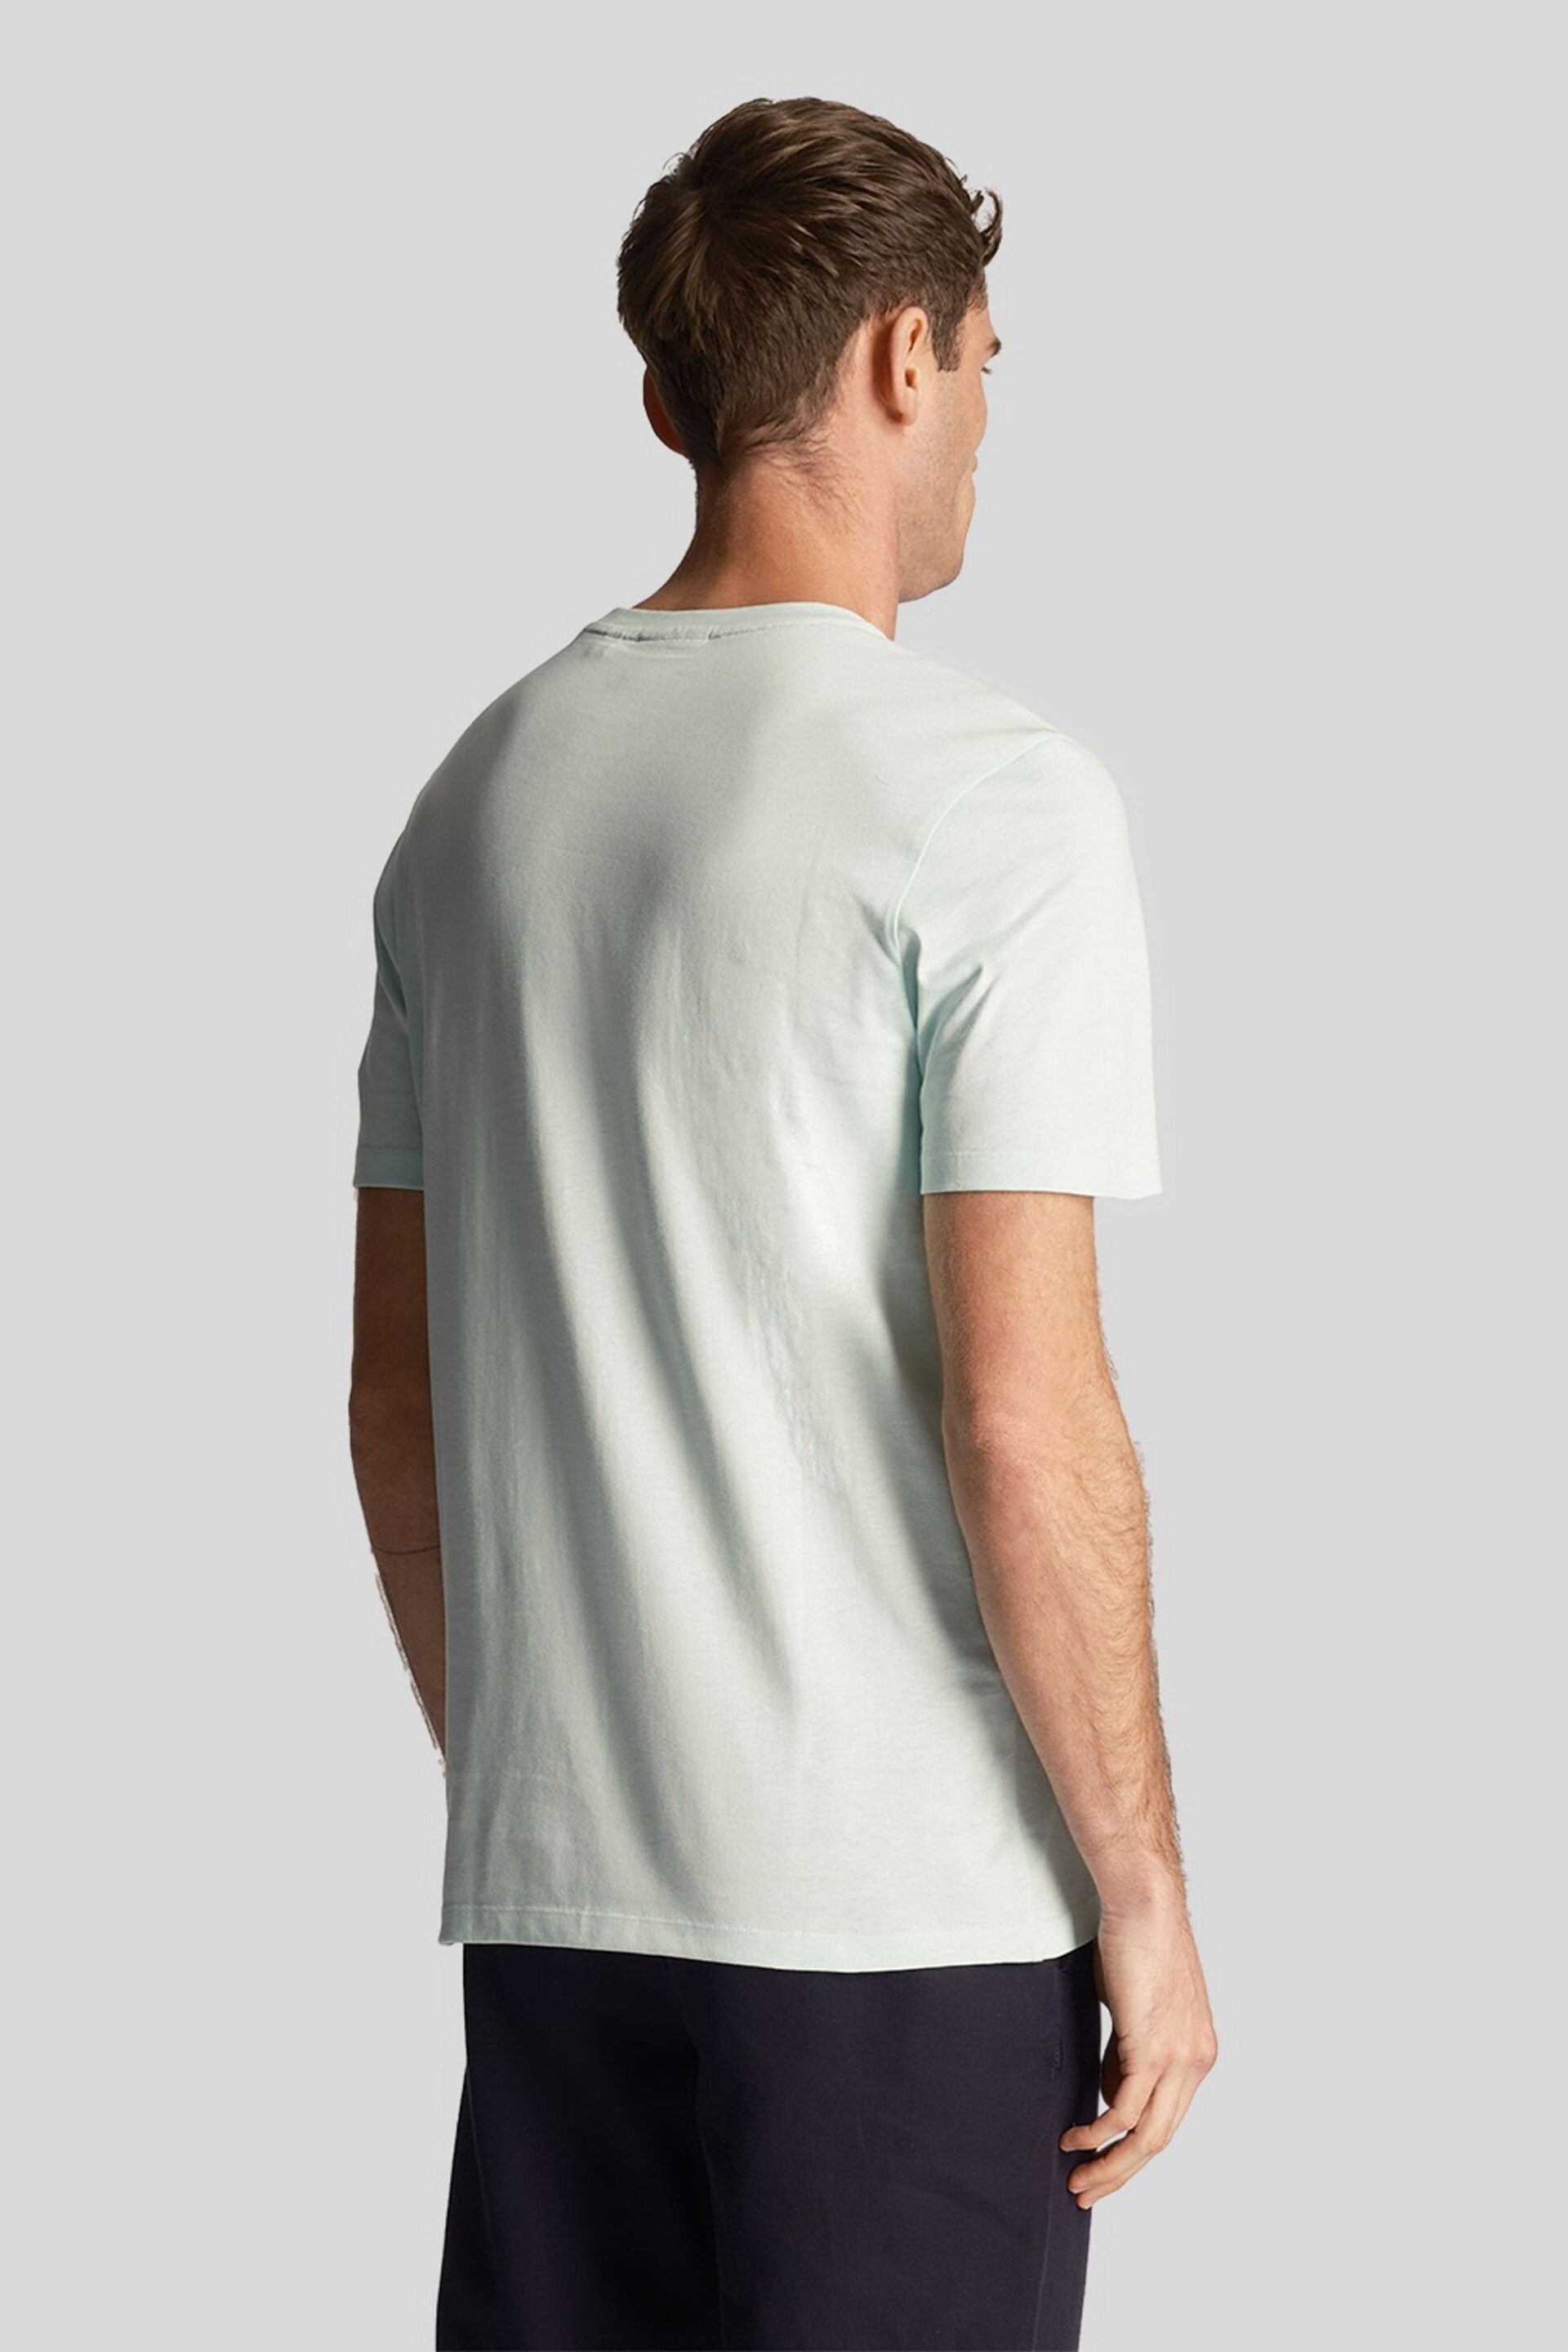 Lyle & Scott Pocket T-Shirt - Image 4 of 4